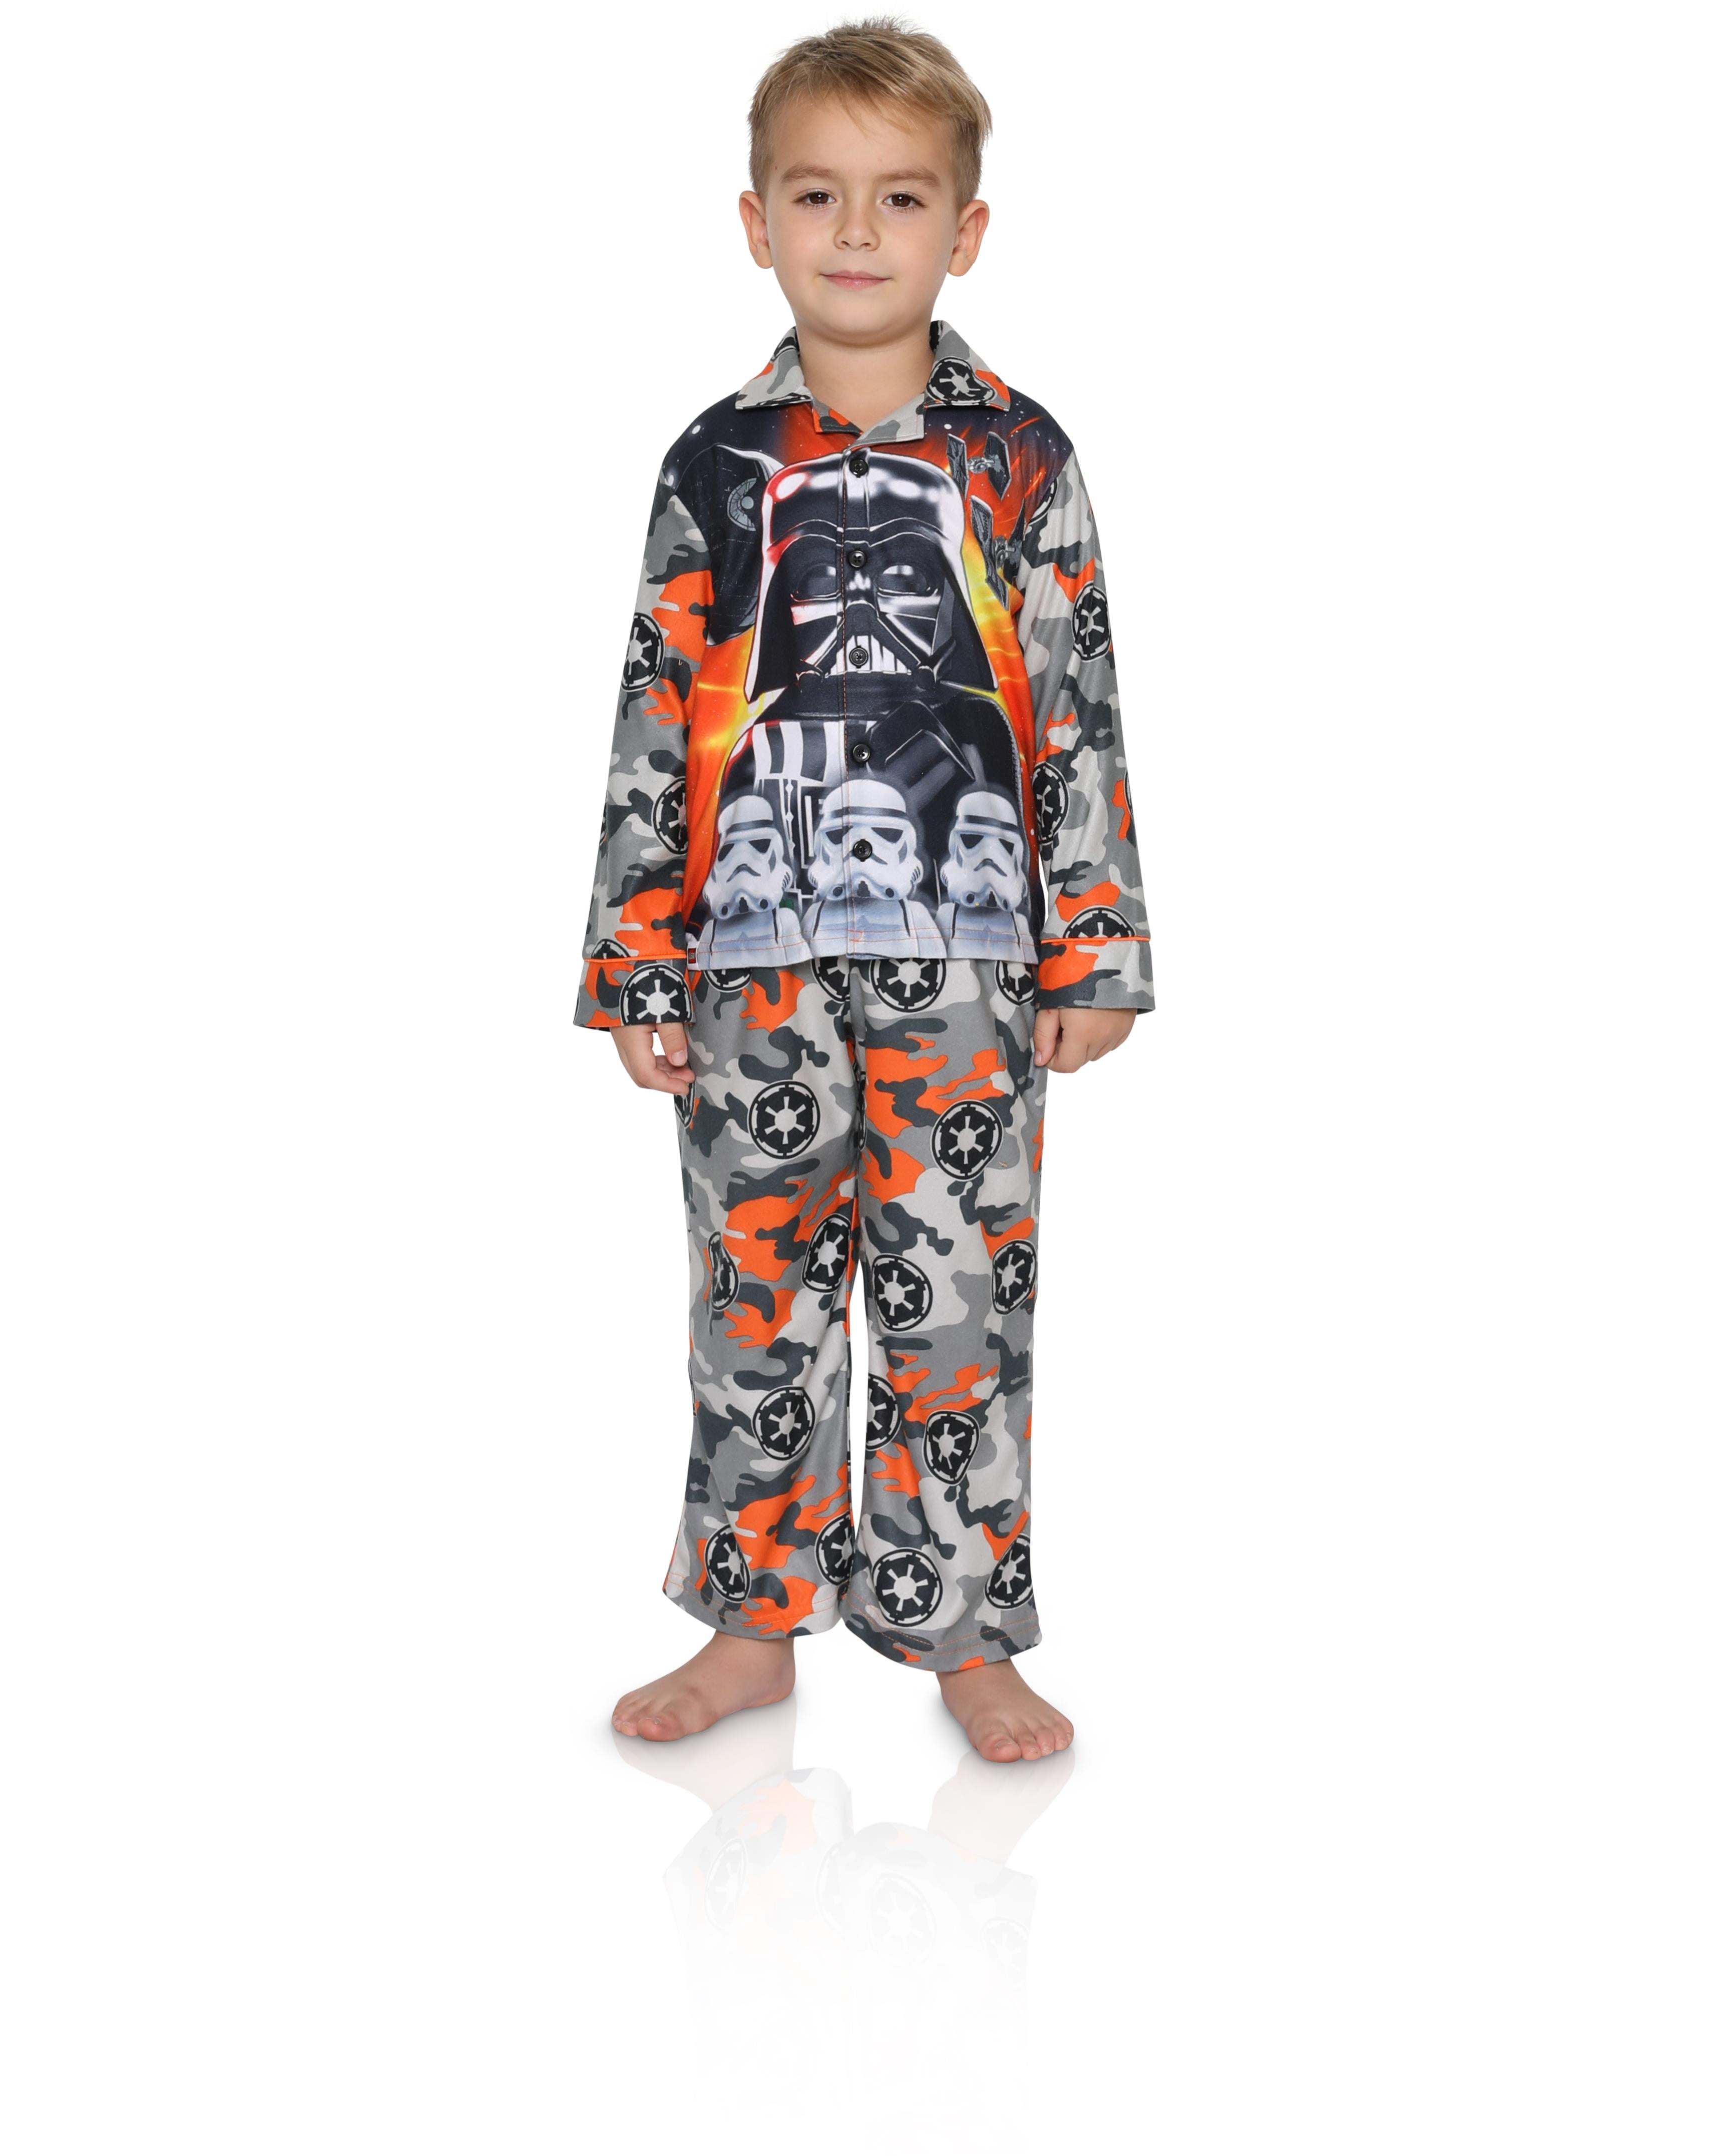 Boys Disney Star Wars All In One Nightwear Kids Star Wars Pyjamas Age 4-10 Years 